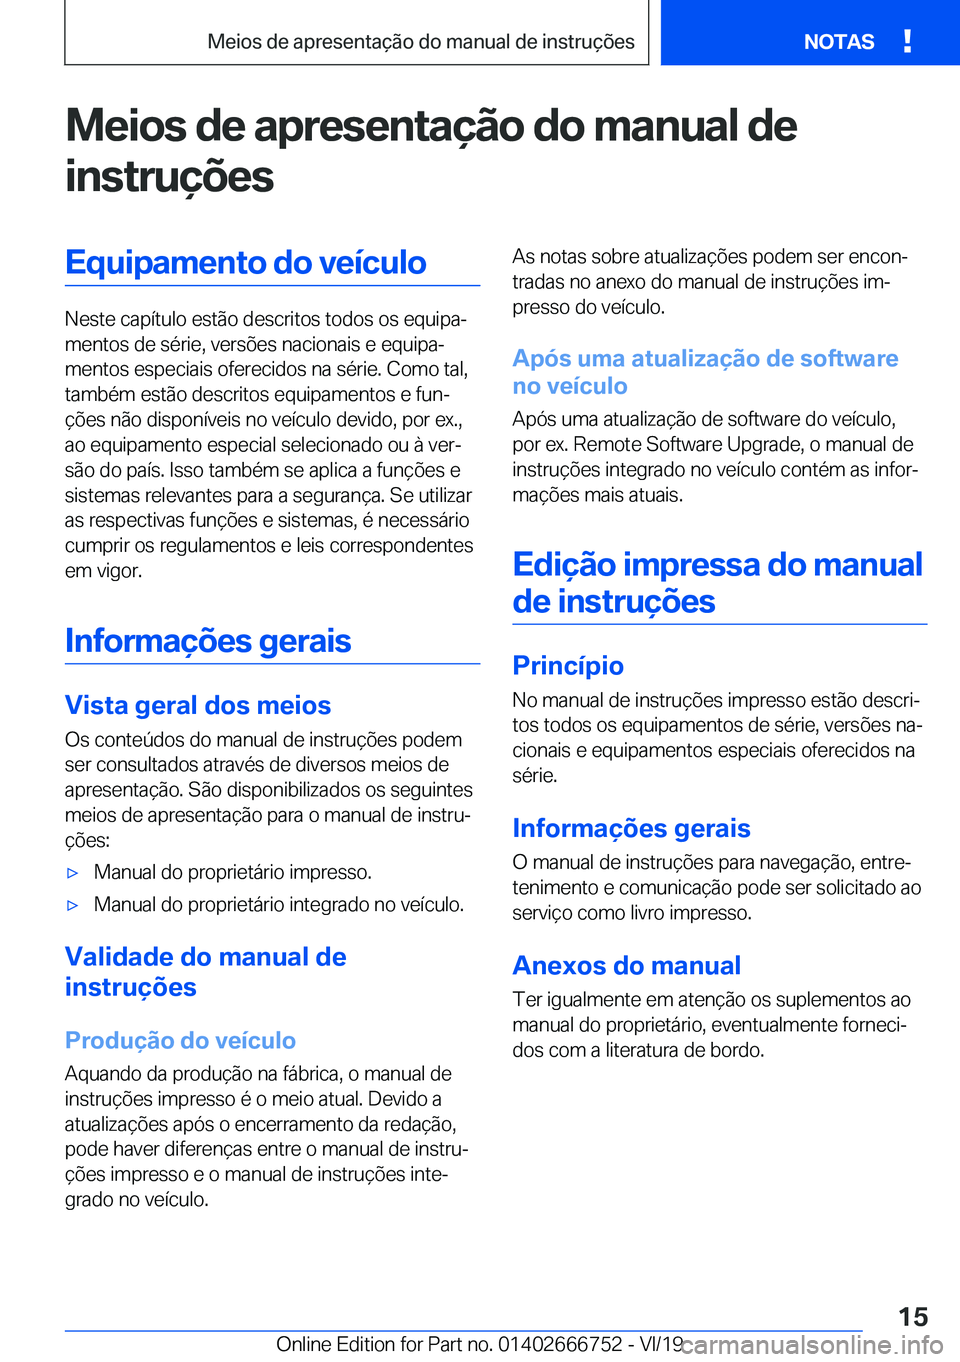 BMW M5 2020  Manual do condutor (in Portuguese) �M�e�i�o�s��d�e��a�p�r�e�s�e�n�t�a�